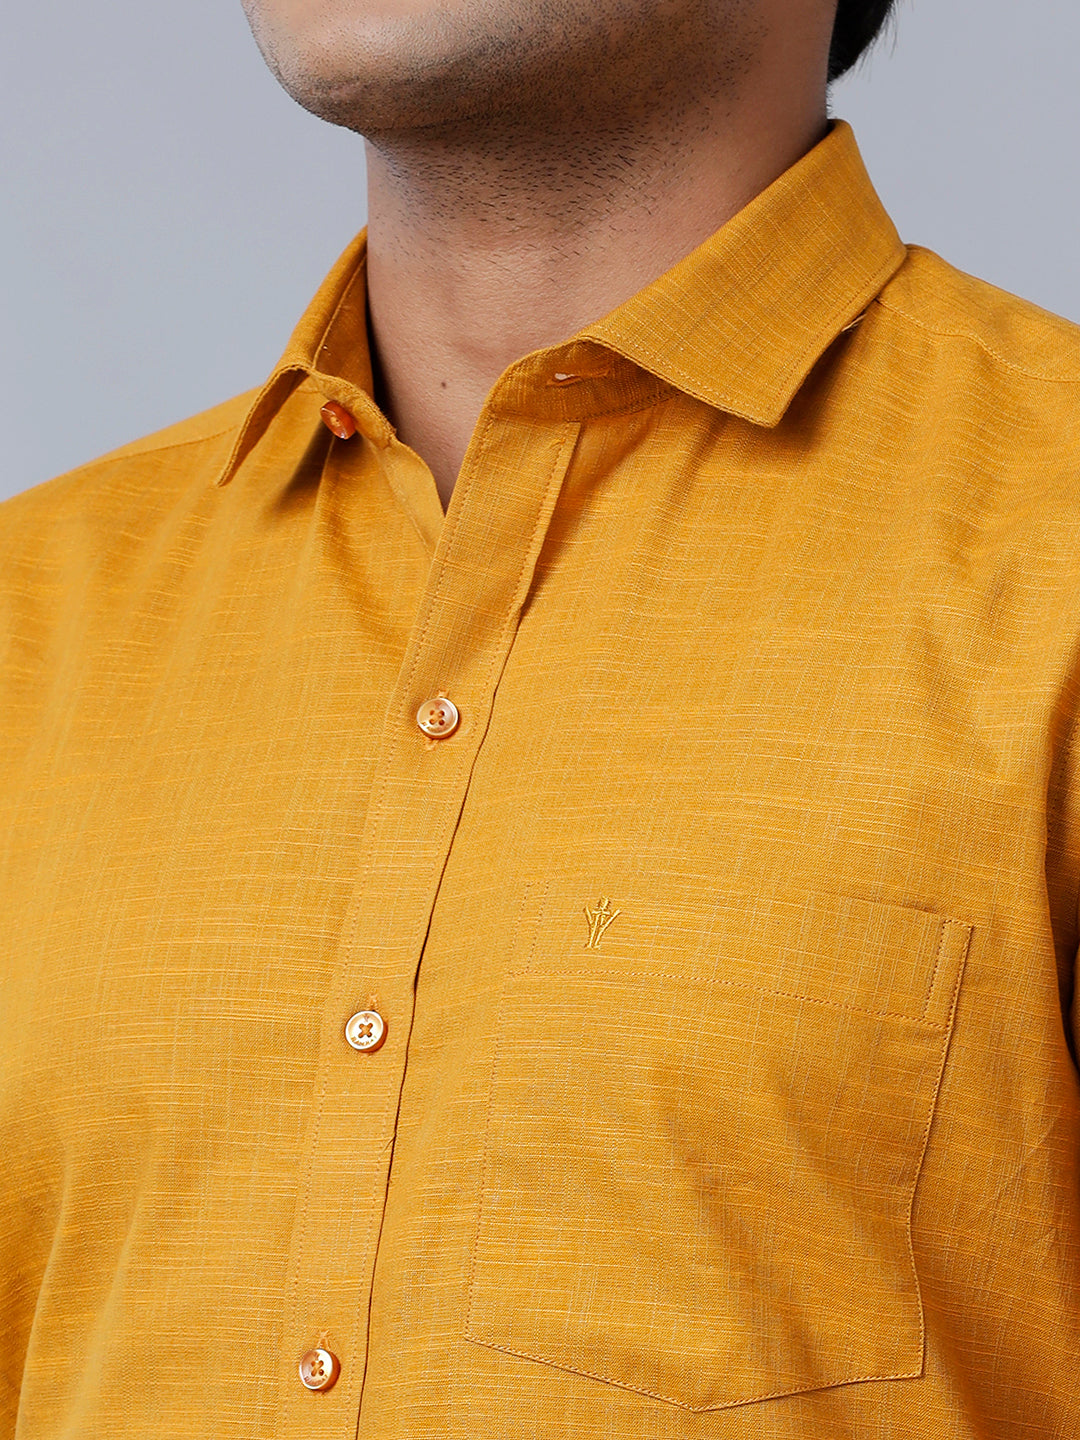 Mens Formal Shirt Half Sleeves Yellowish Brown CL2 GT32-Zoom view